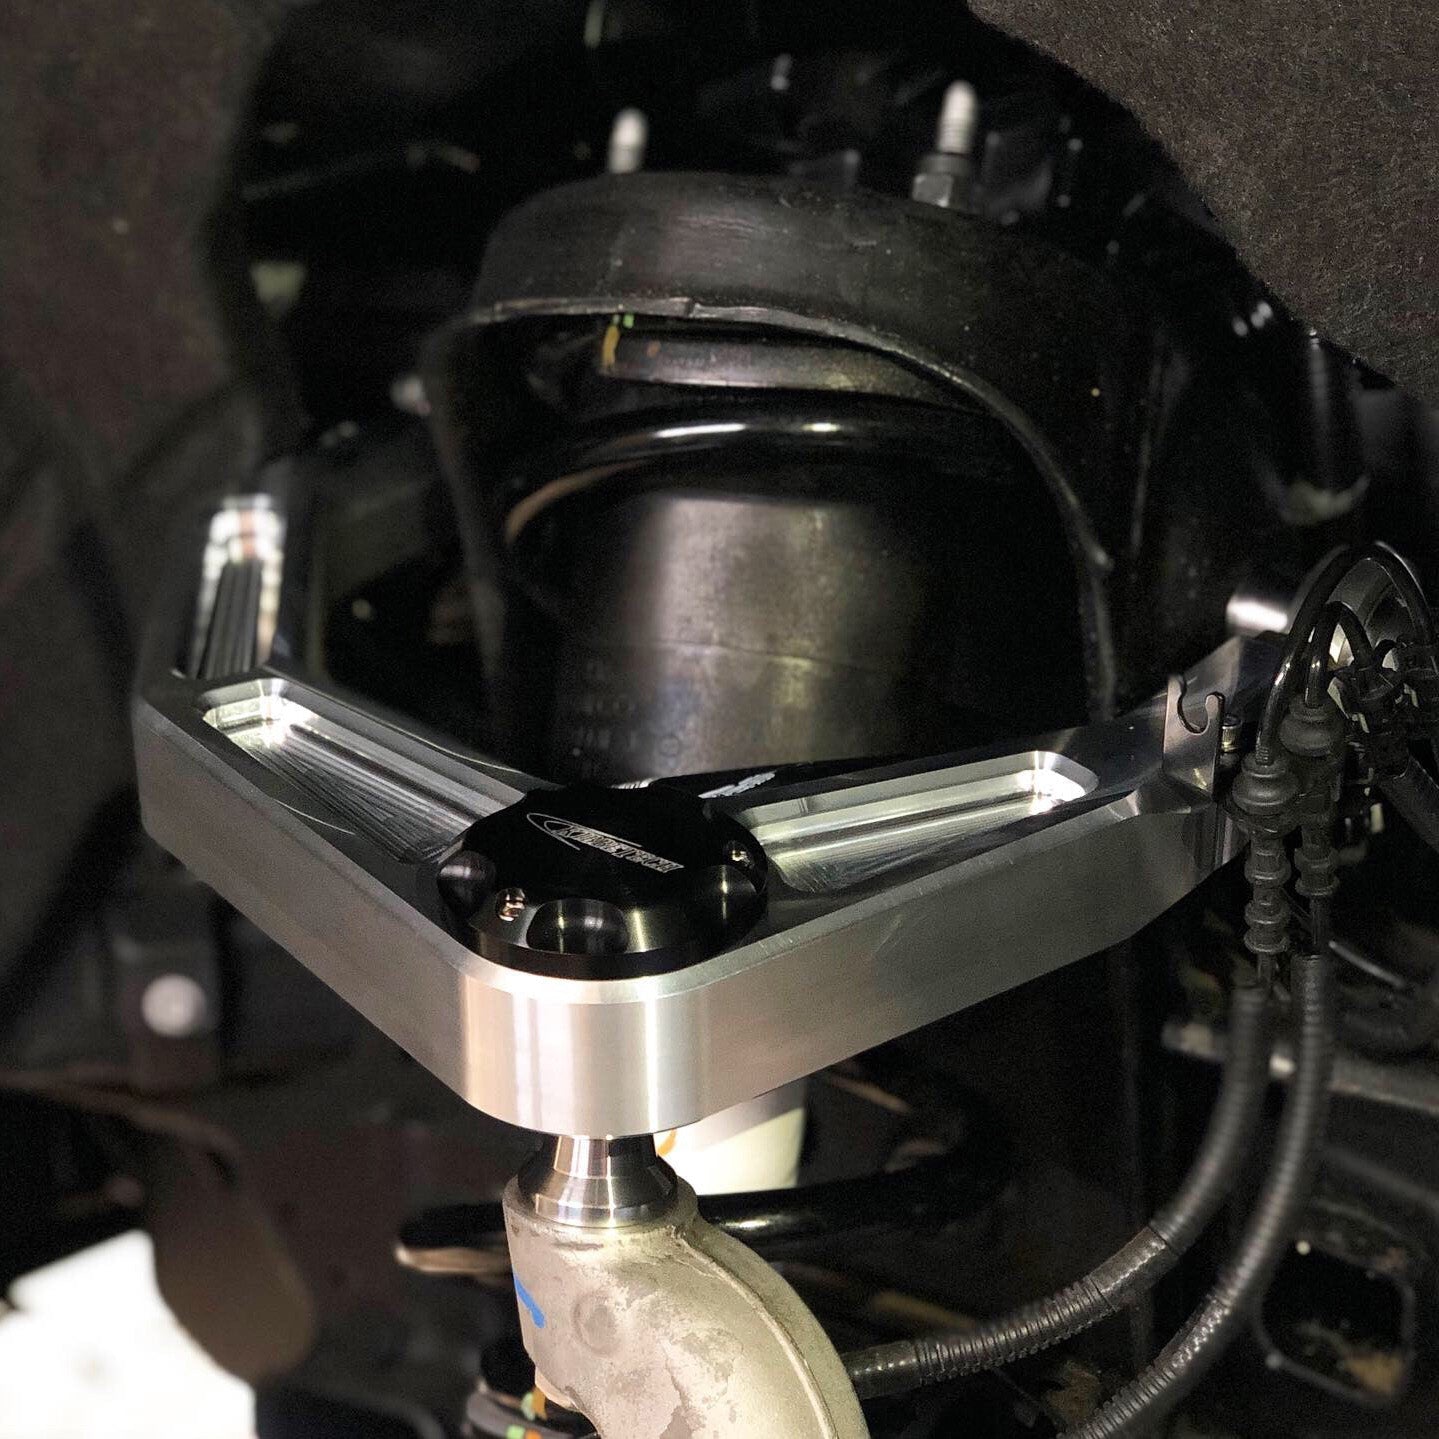 '19-23 Chevy Silverado Kibbetech Billet Aluminum Upper Control Arms close-up